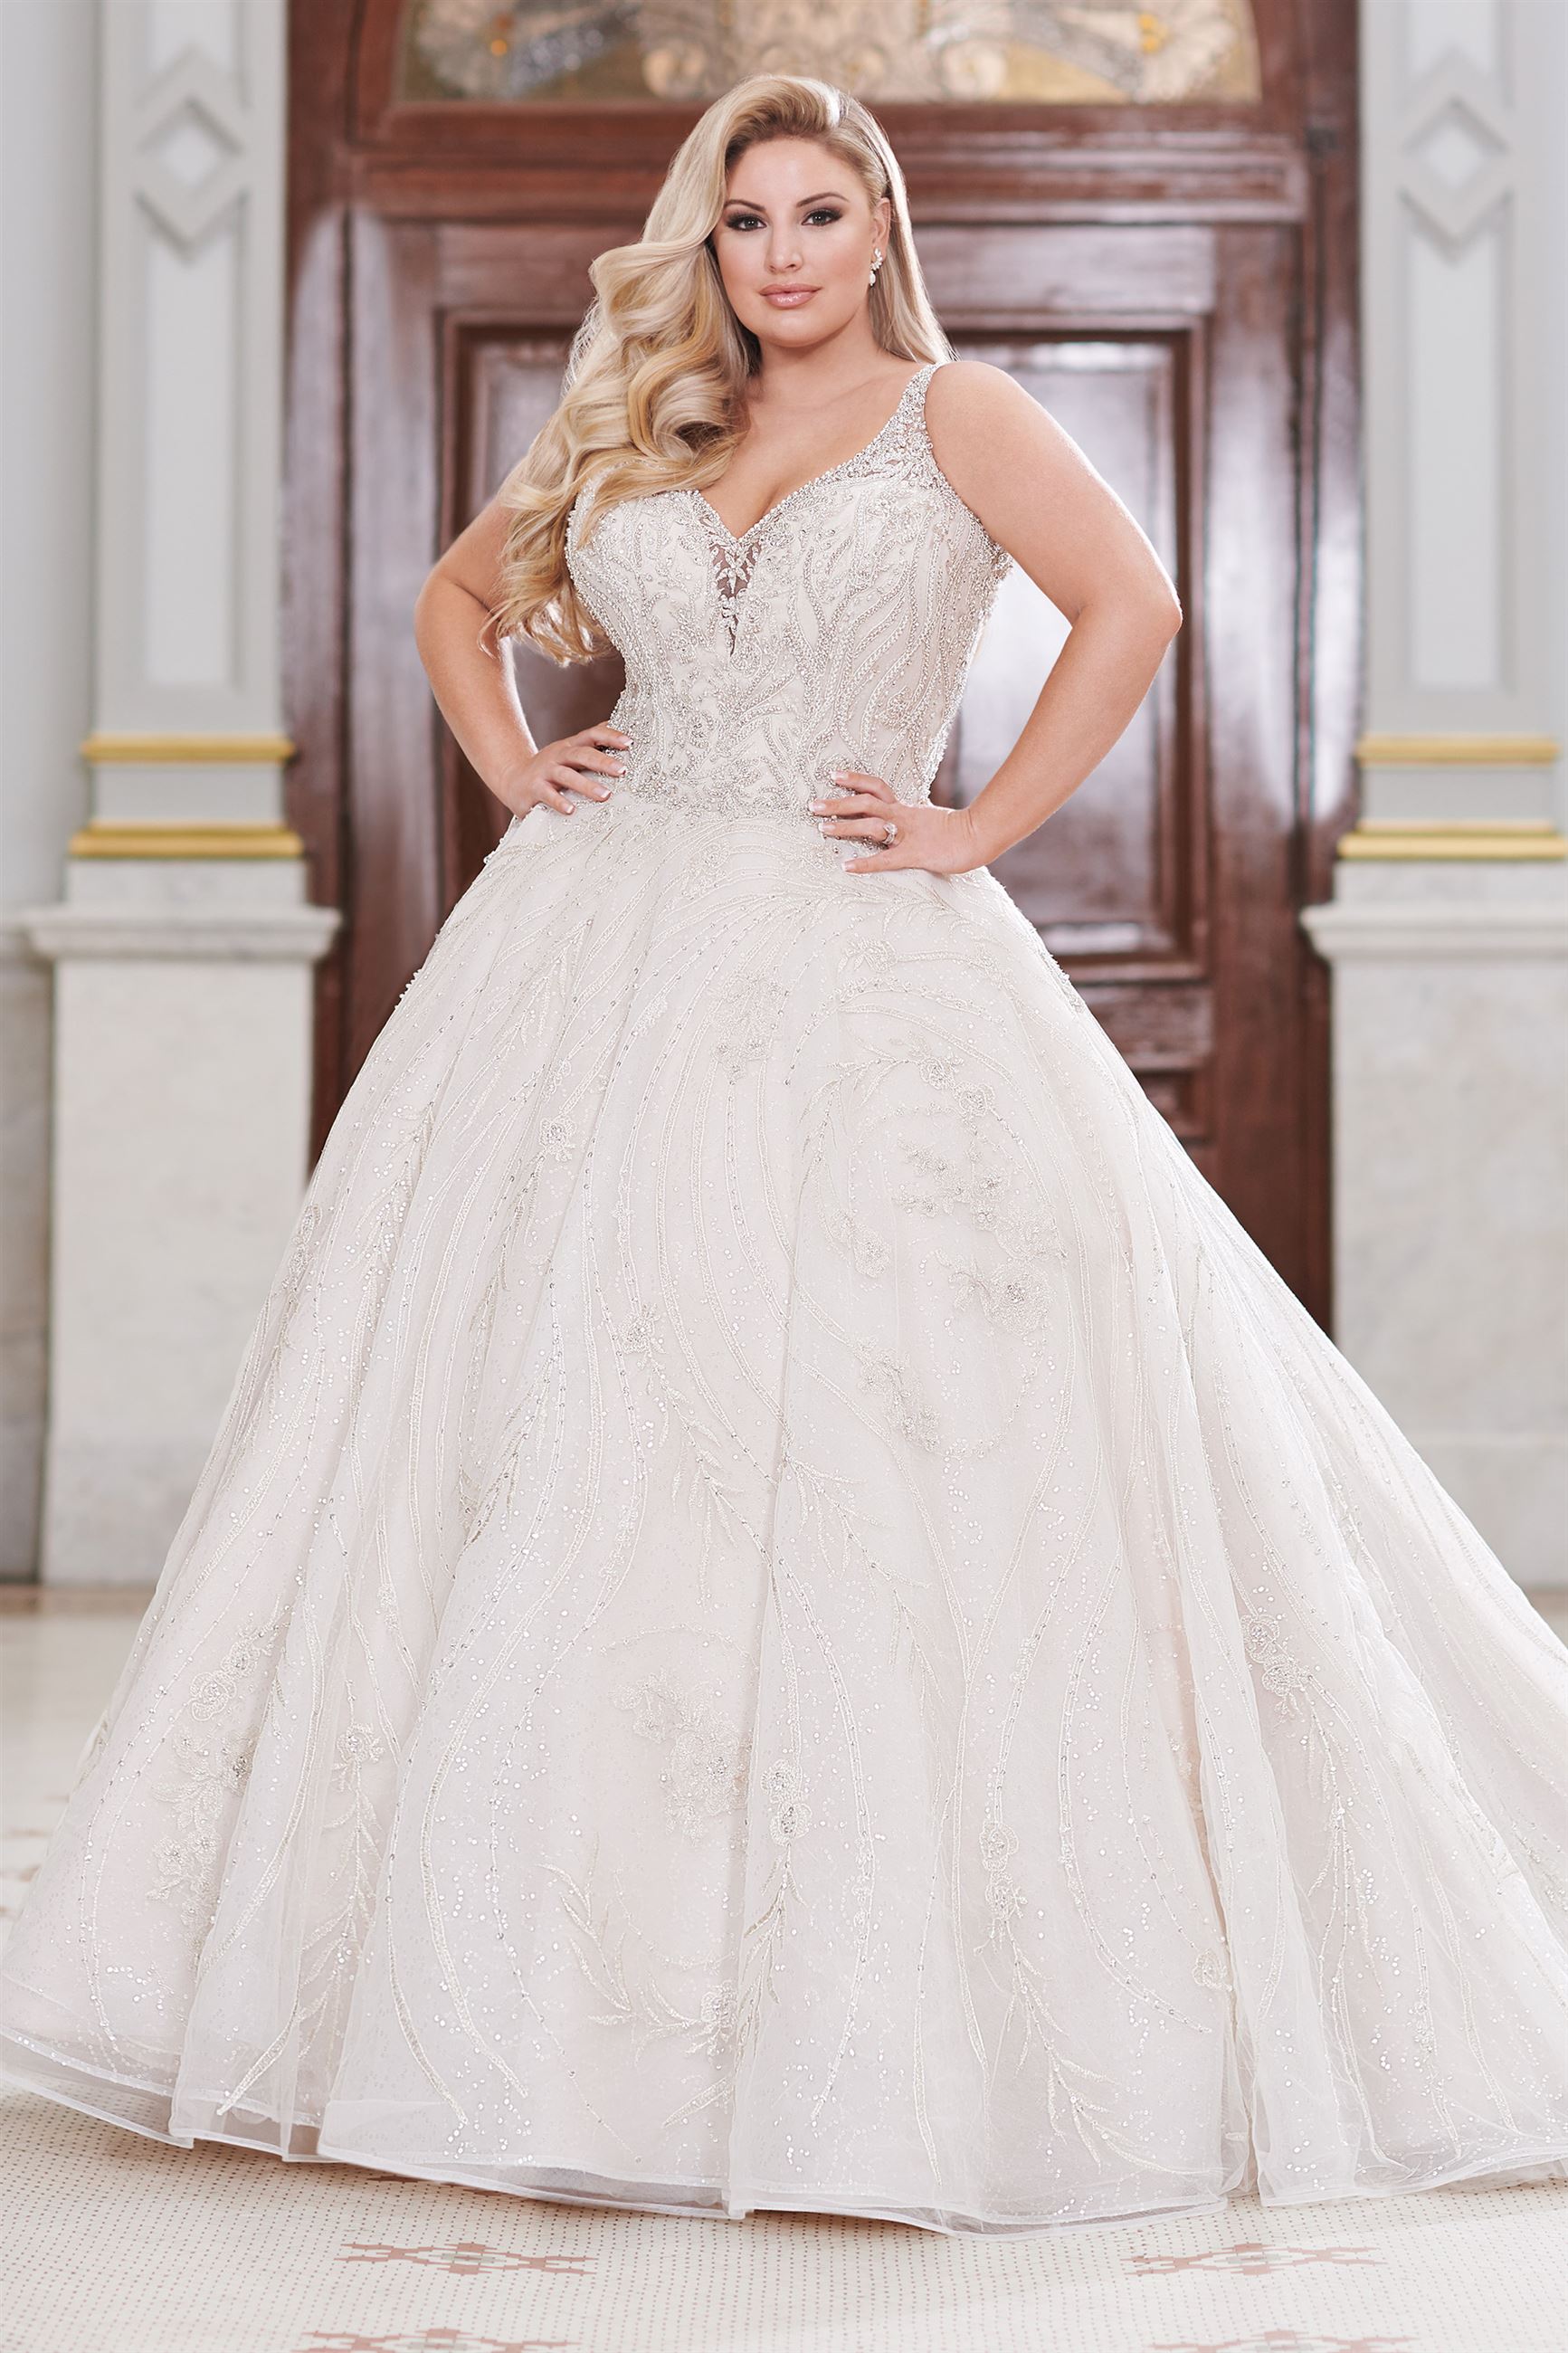 Princess Ball Gown Wedding Dress – Fashion dresses